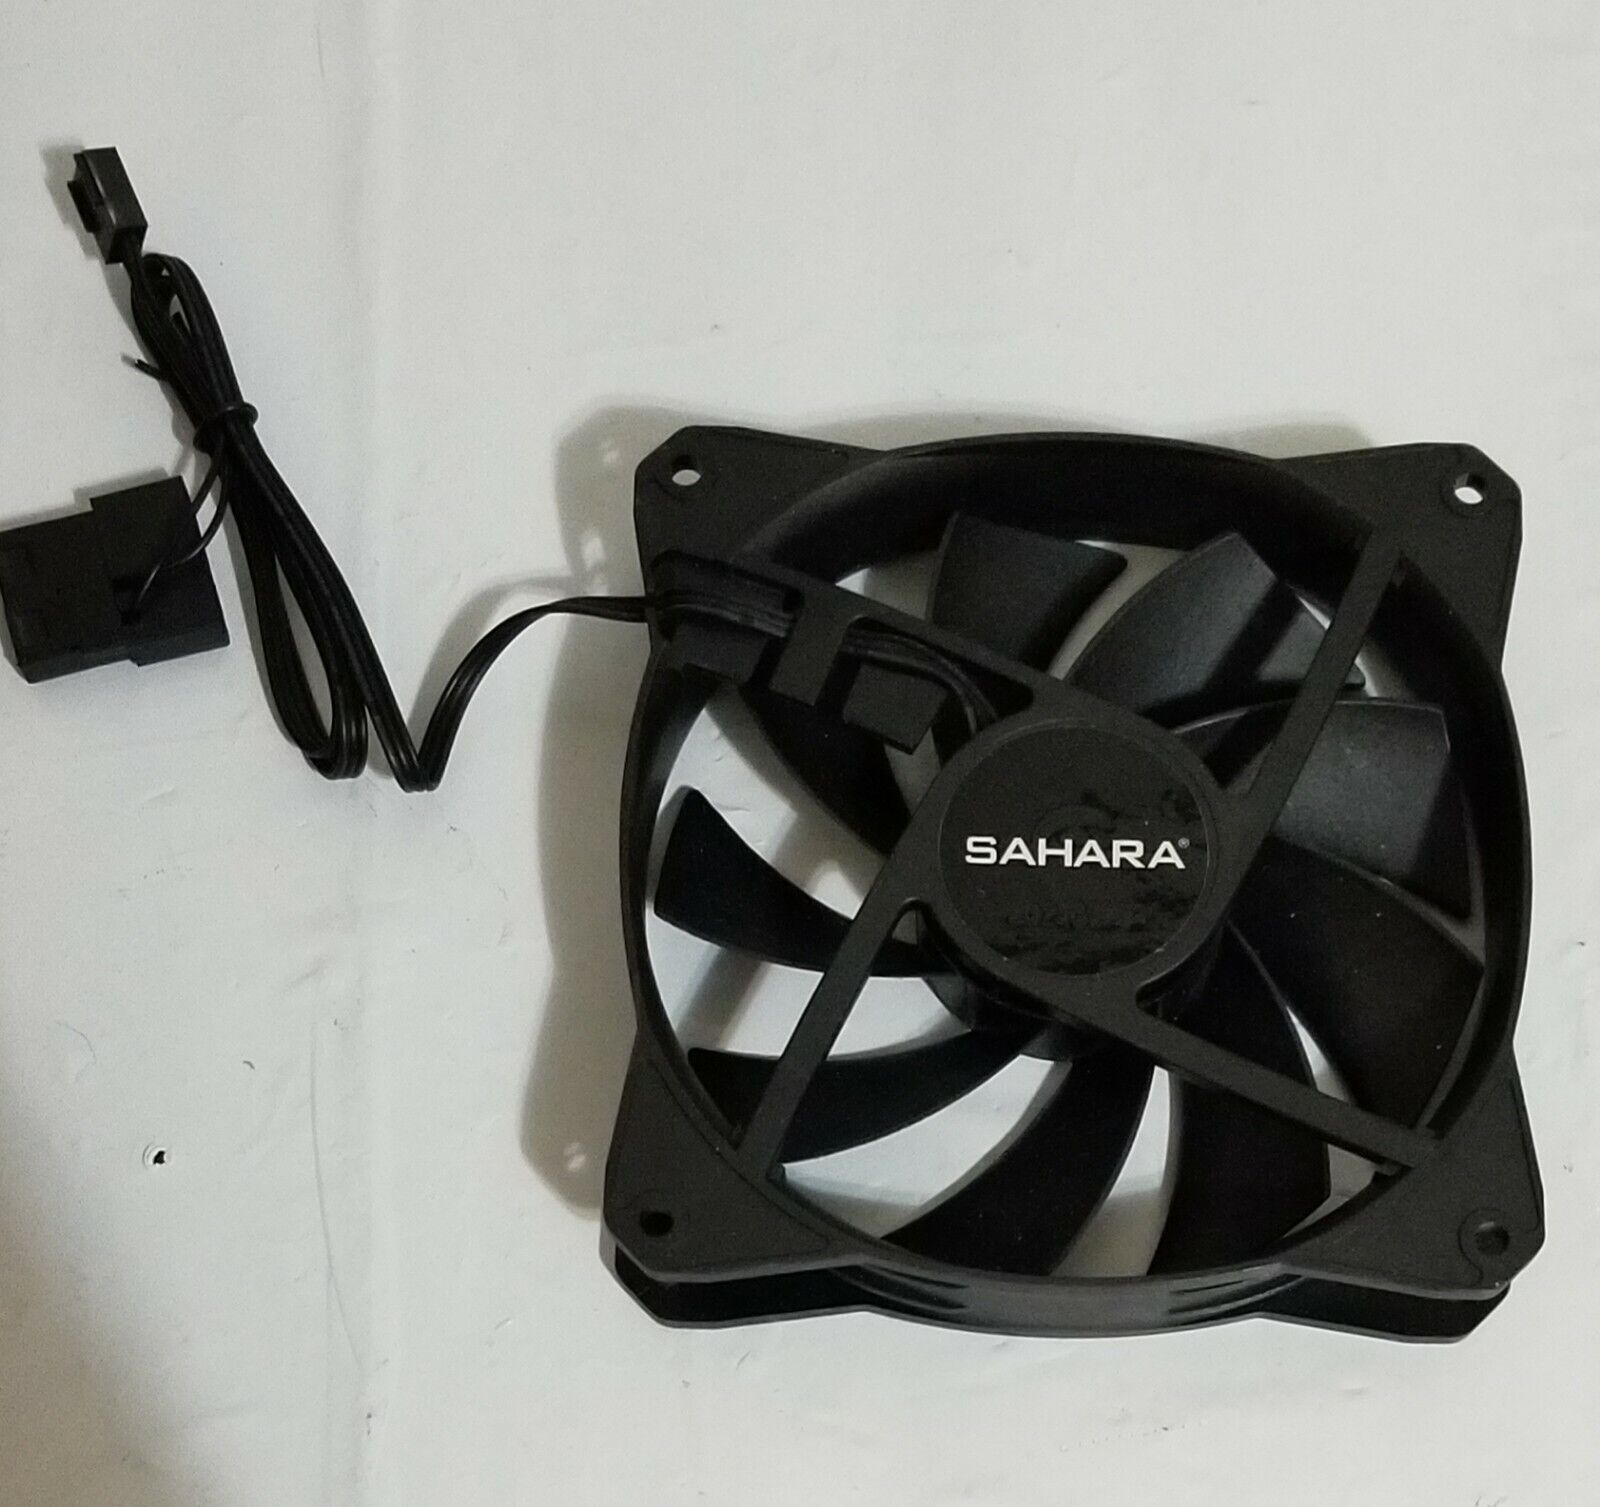 Sahara Computer PC Fan 120mm Black New